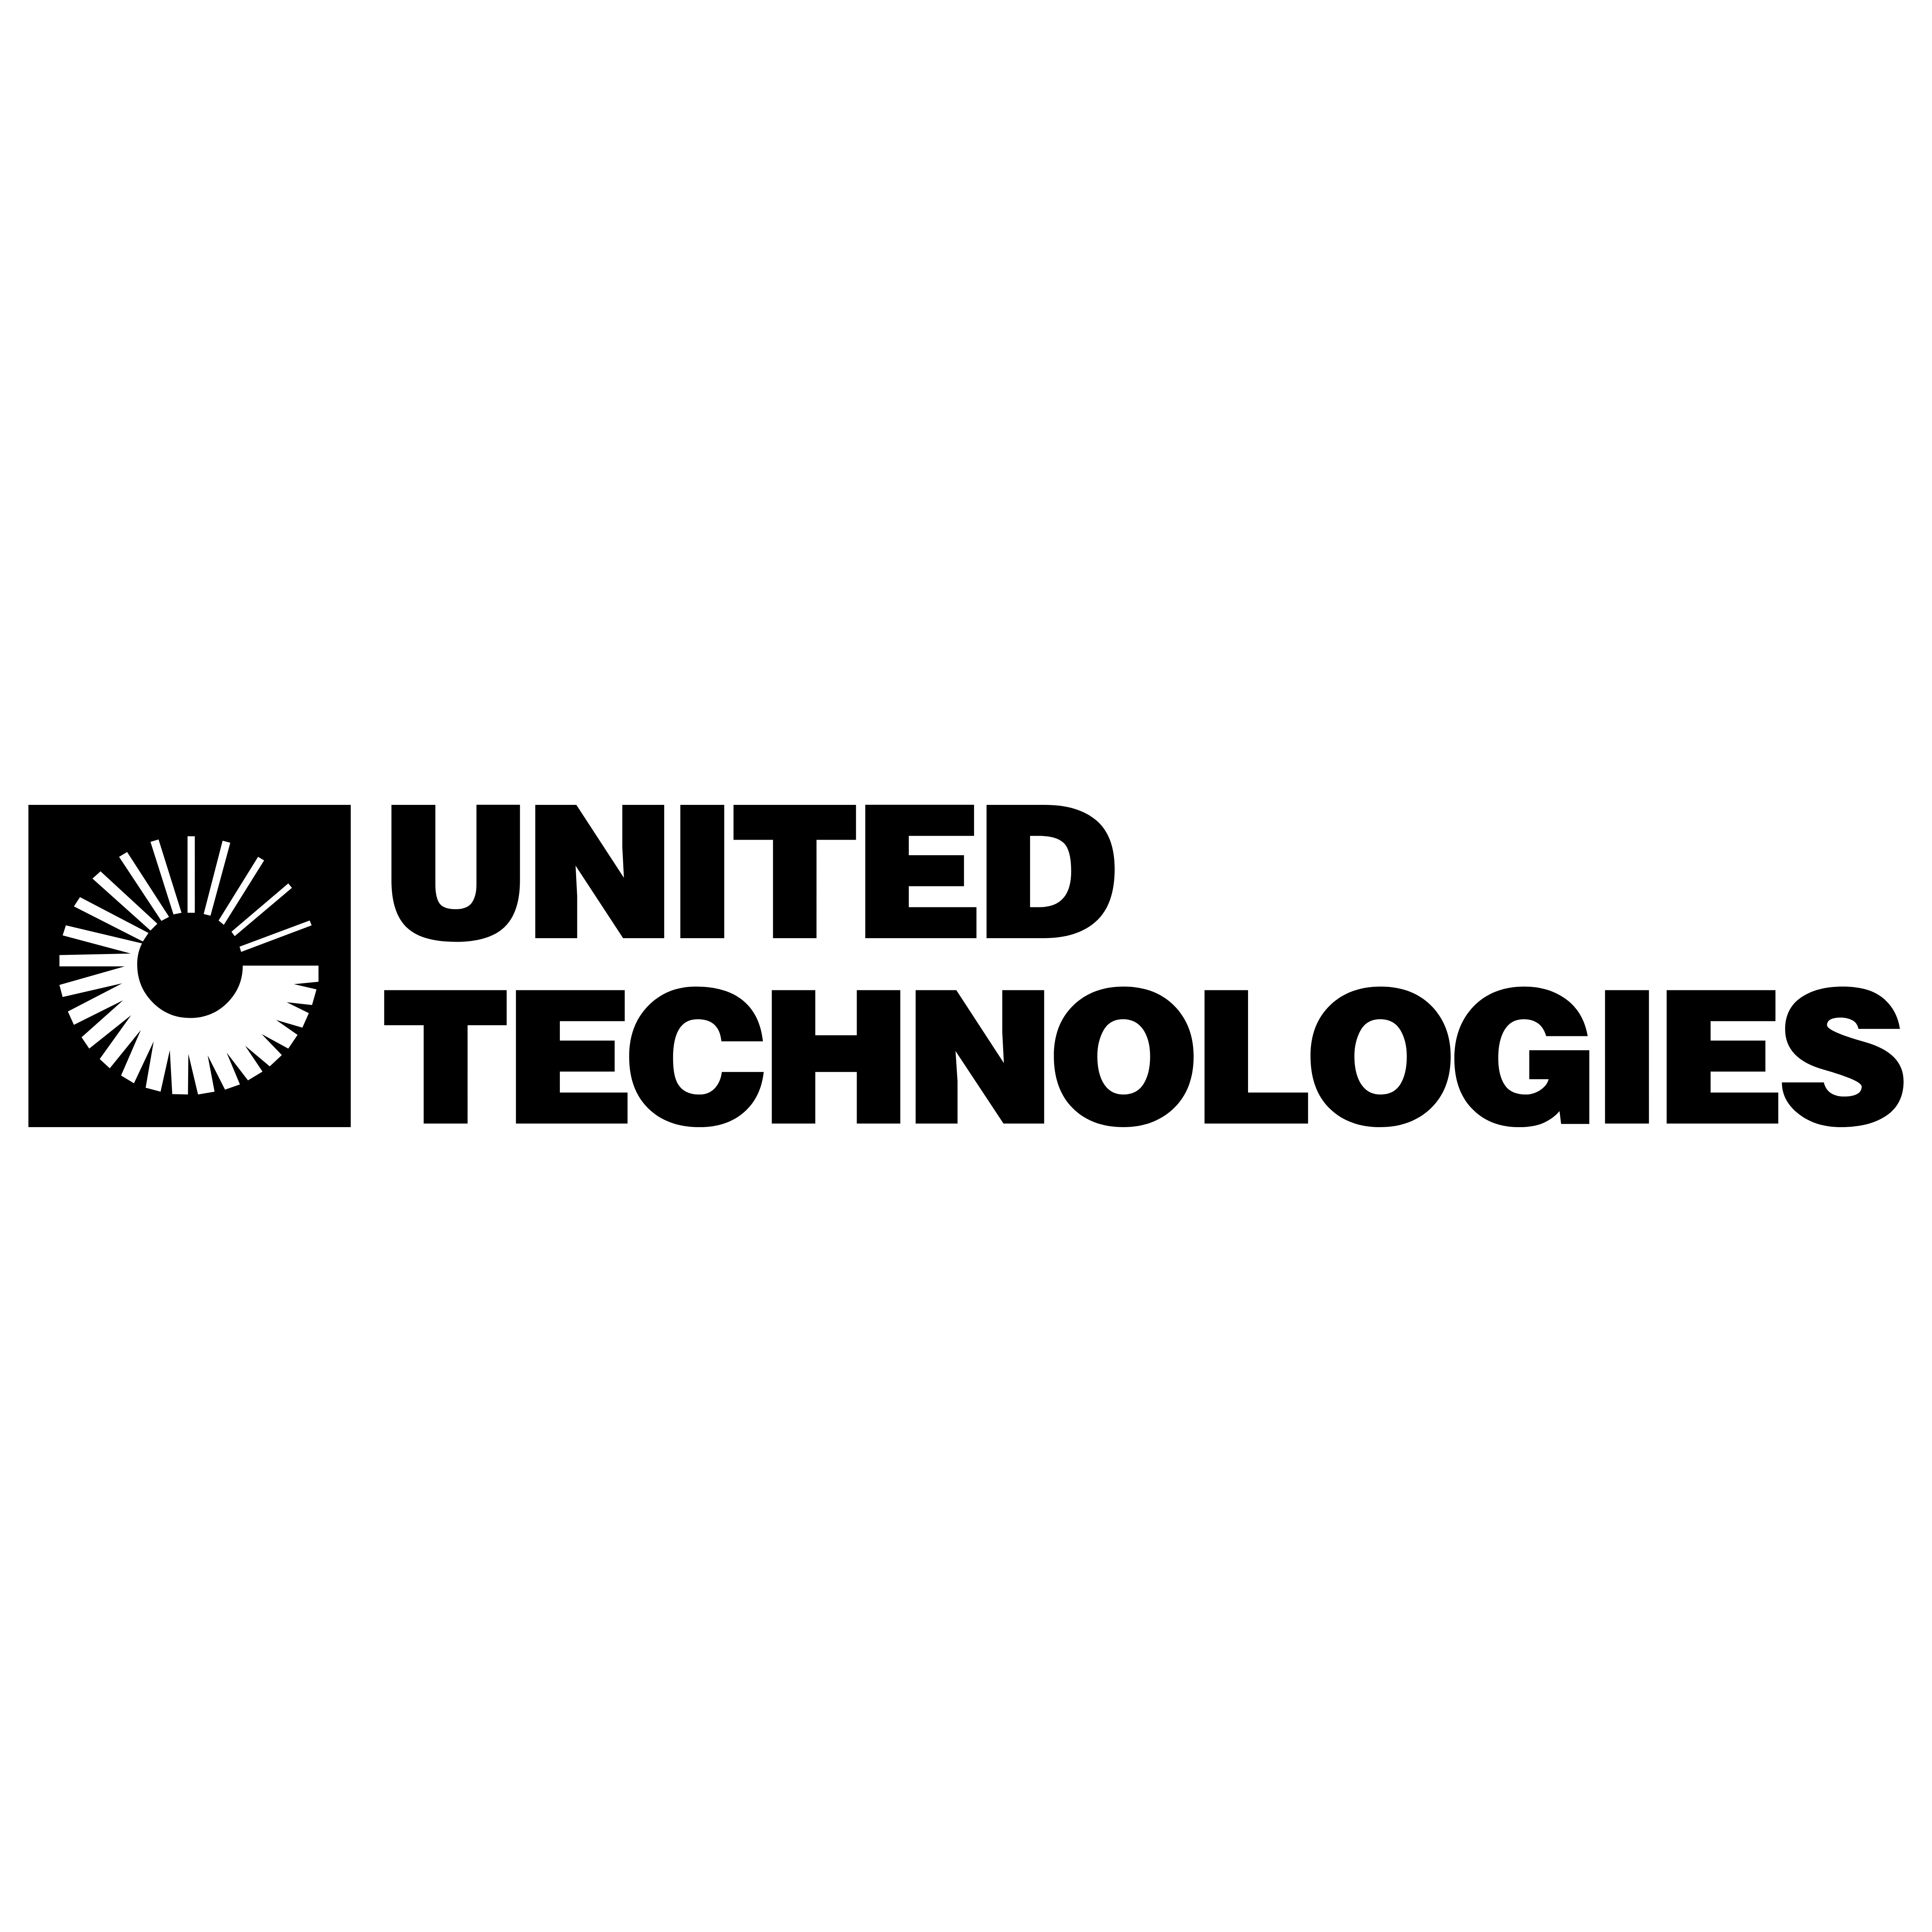 United Technologies Logo - United Technologies – Logos Download